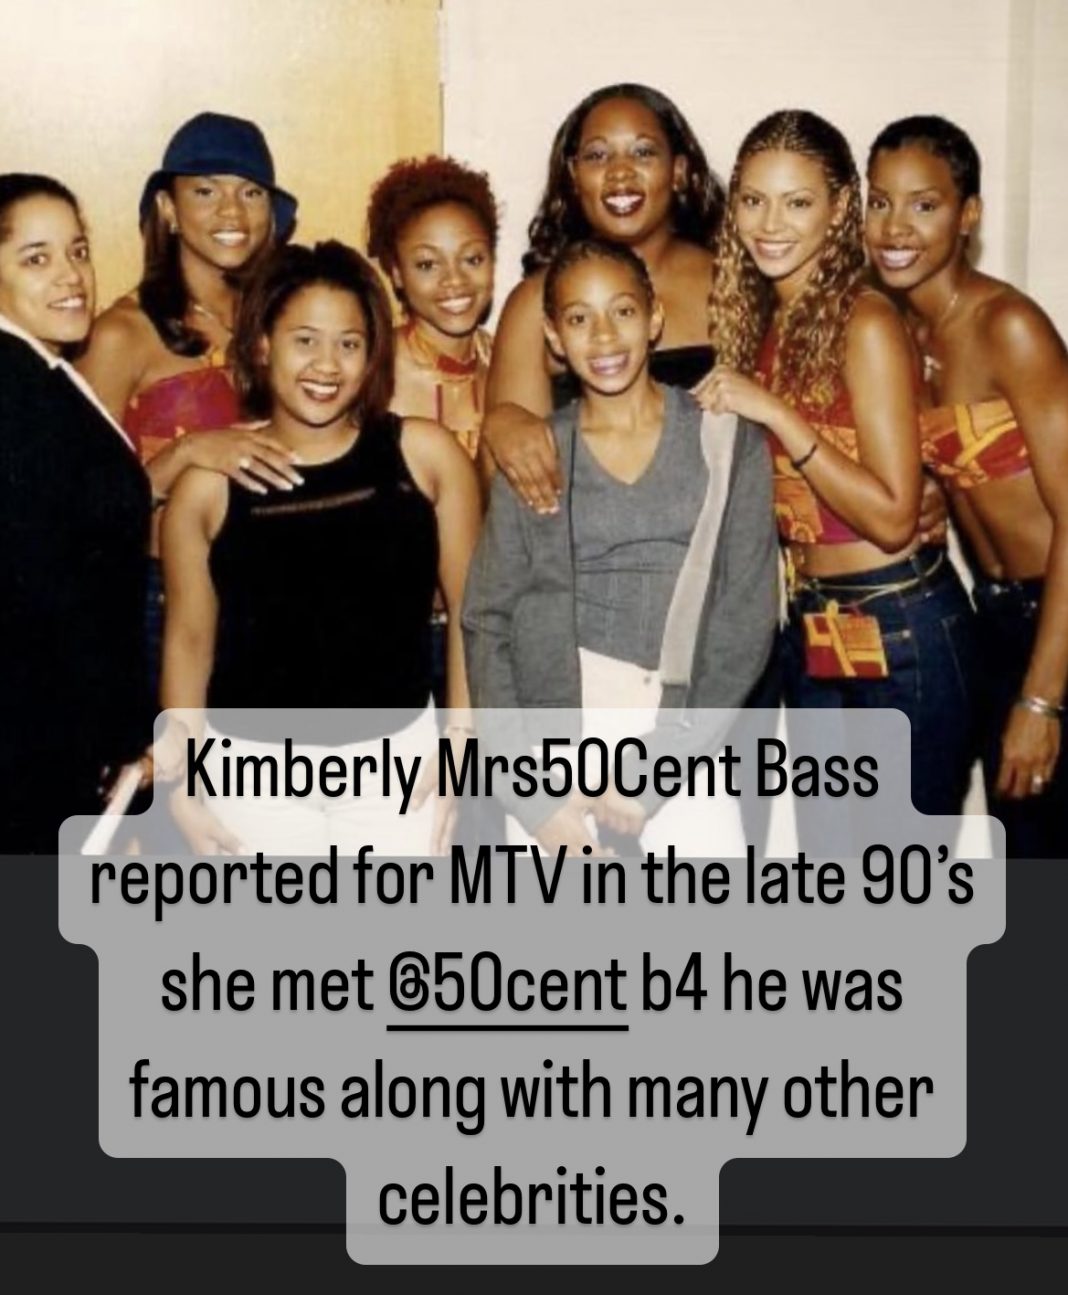 Kimberly “Mrs. 50 Cent” Bass